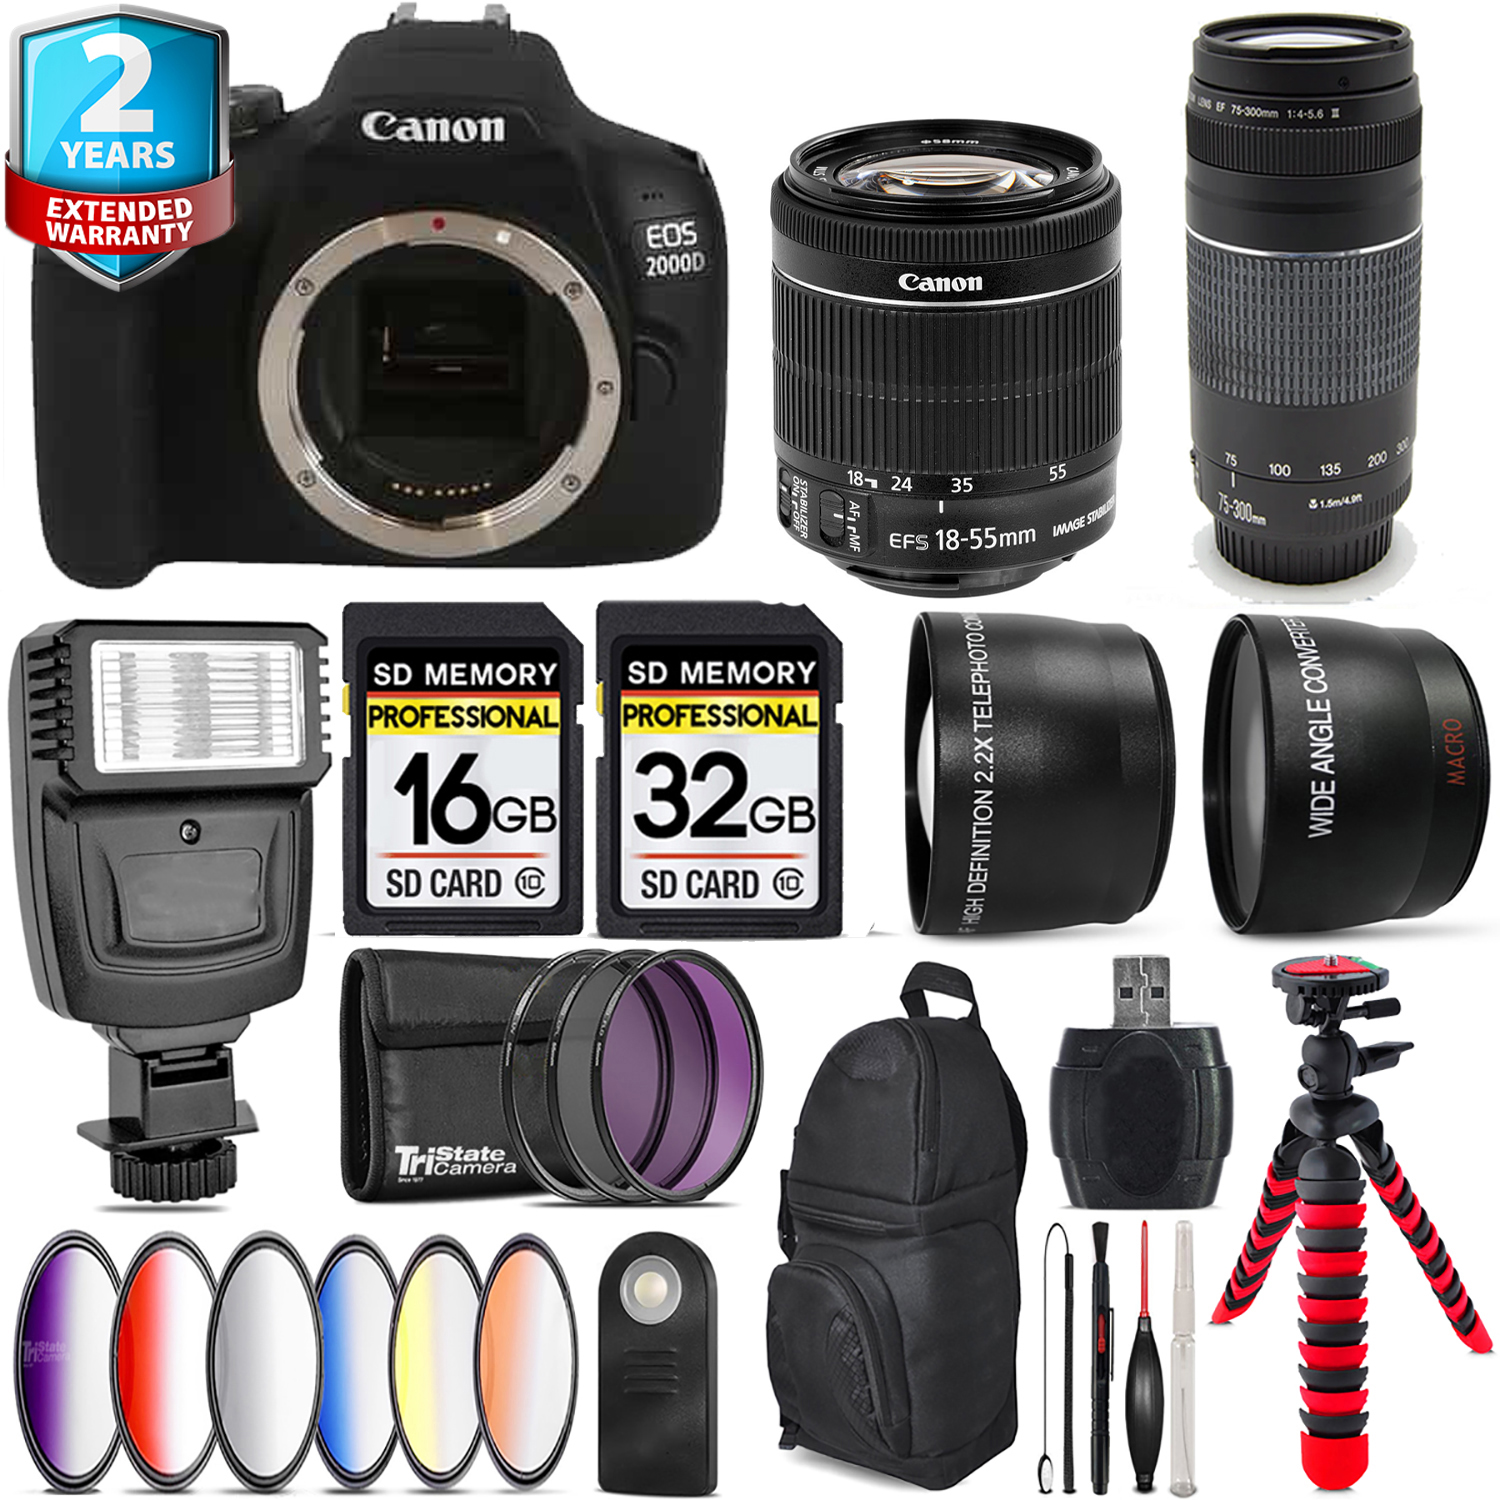 Canon EOS 2000D / Rebel T7 DSLR Camera + 18-55mm Lens+ 30 Piece